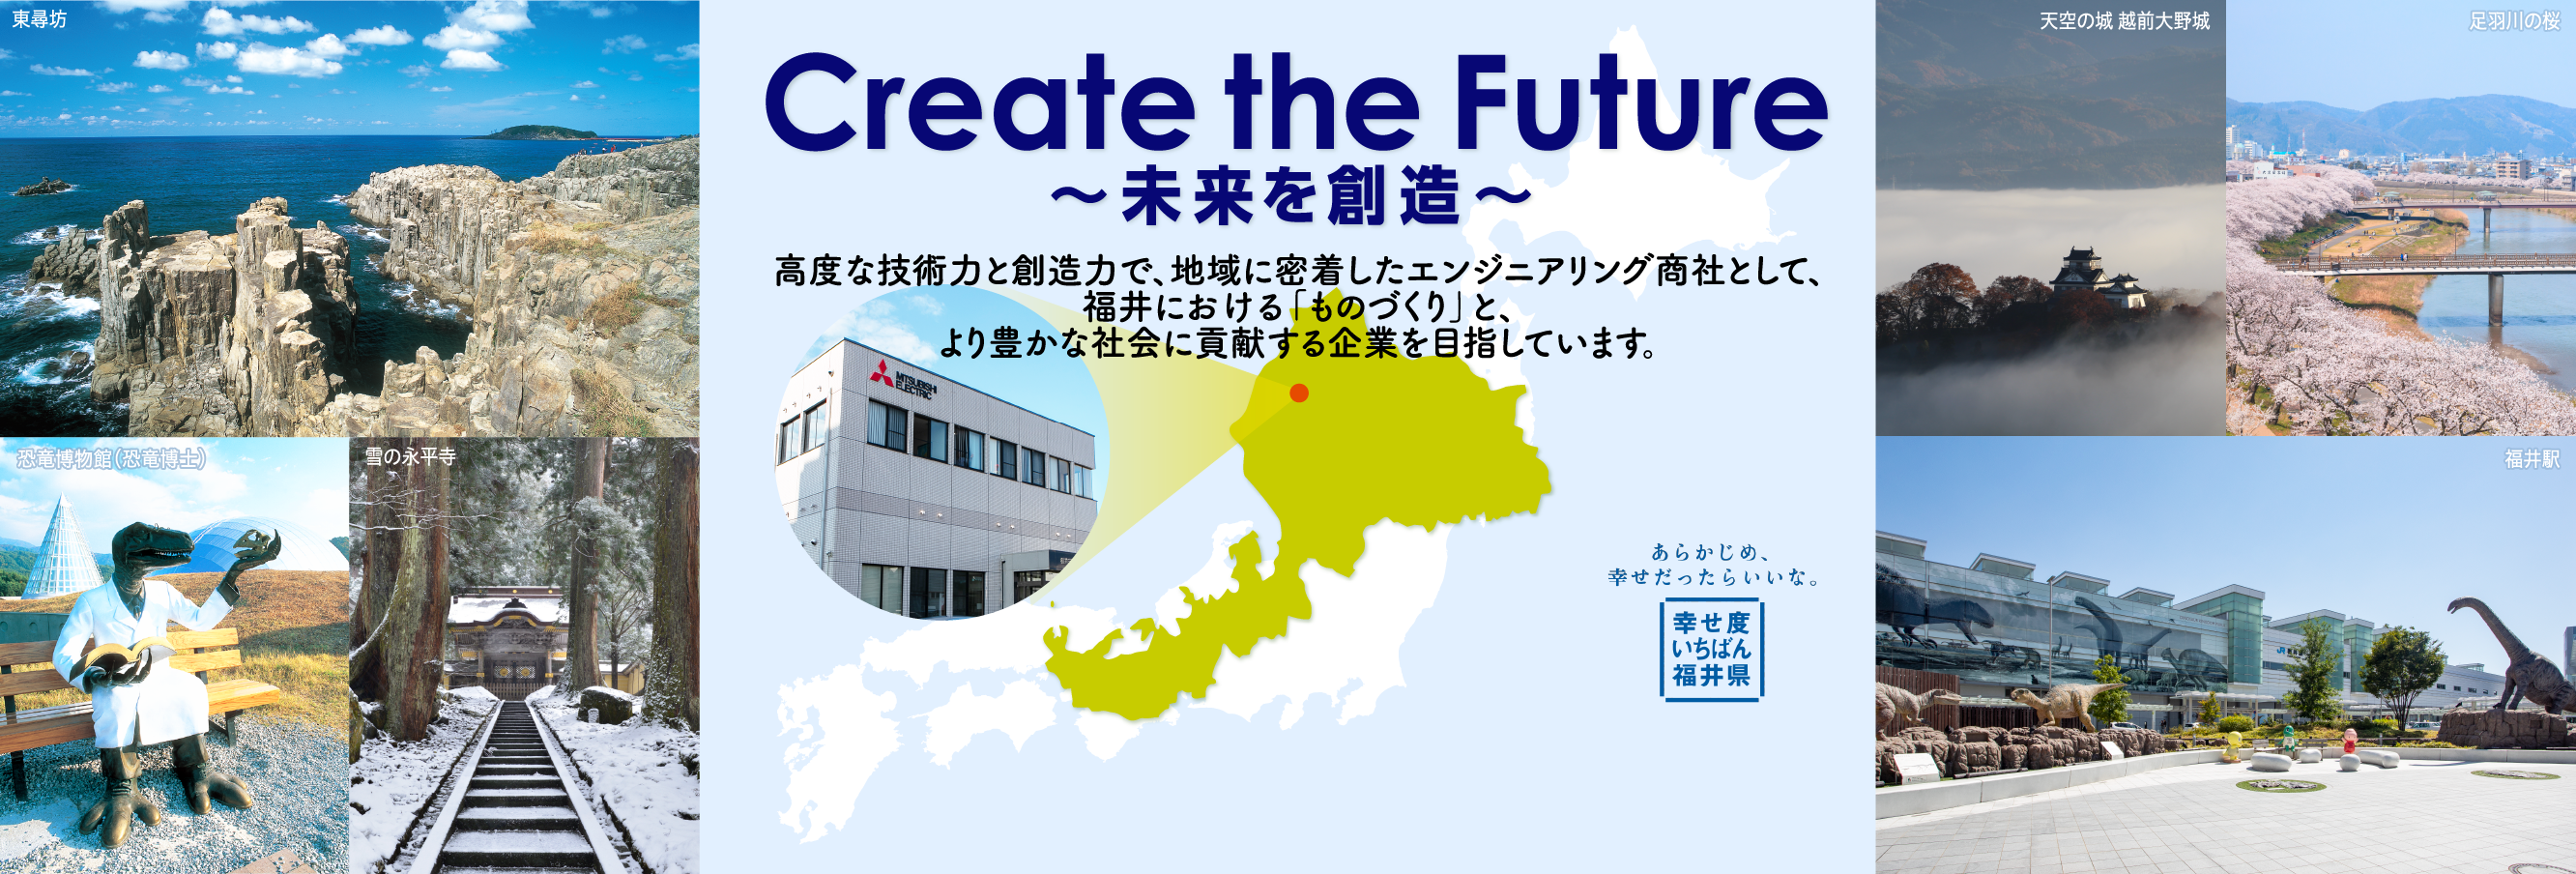 Create the Future 〜未来を創造〜　高度な技術力と創造力で、地域に密着したエンジニアリング商社として、福井における「ものづくり」と、より豊かな社会に貢献する企業を目指しています。